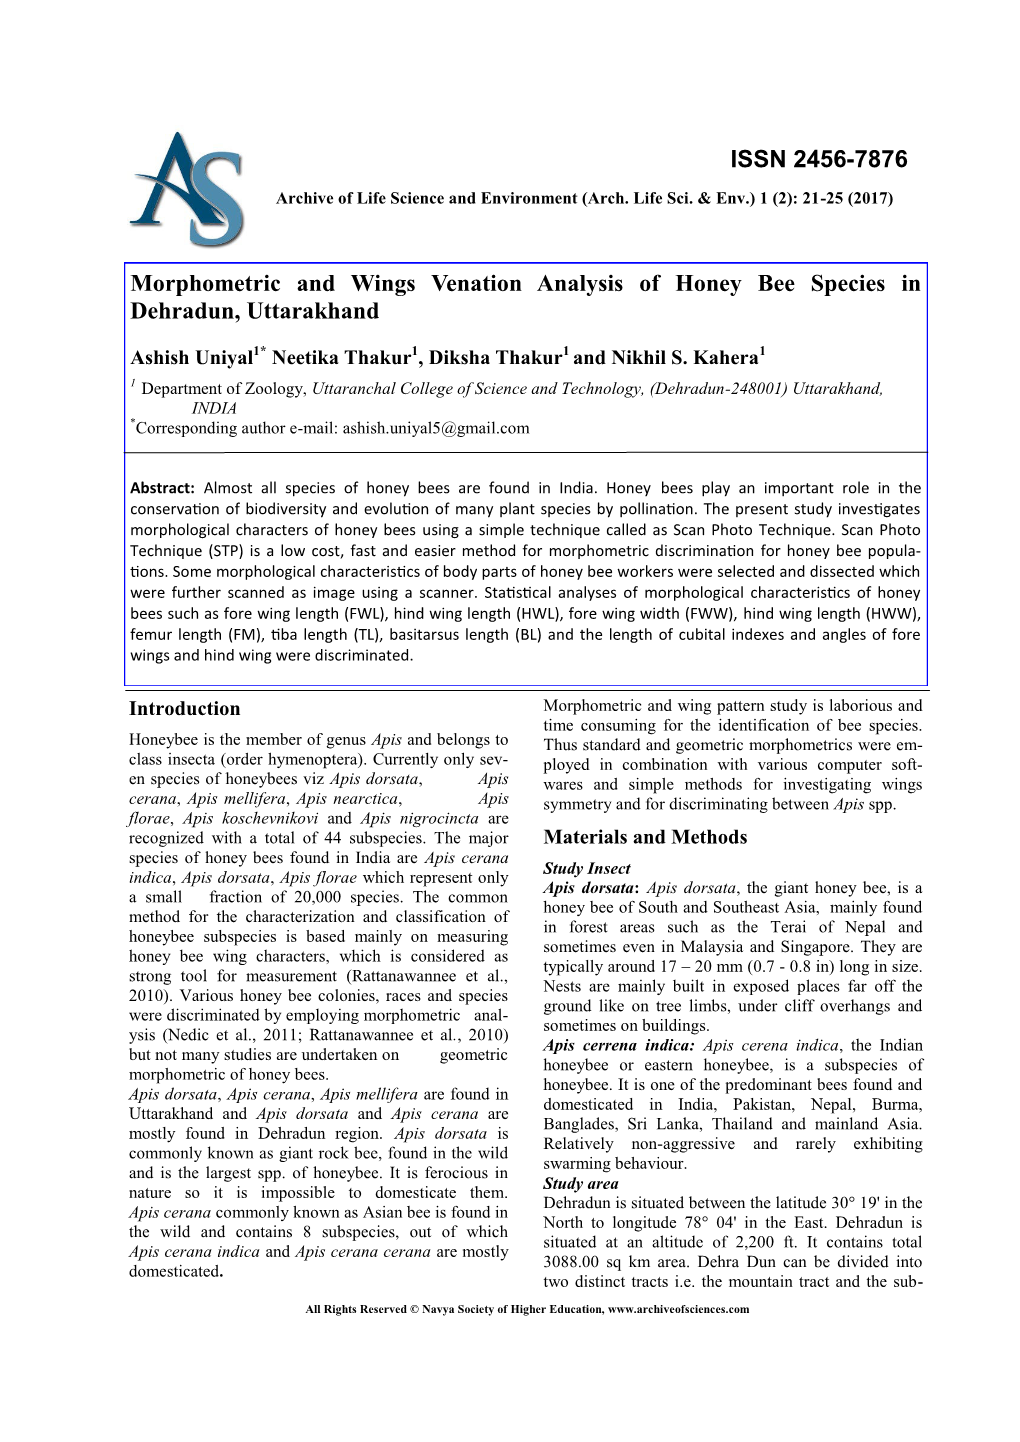 Morphometric and Wings Venation Analysis of Honey Bee Species in Dehradun, Uttarakhand